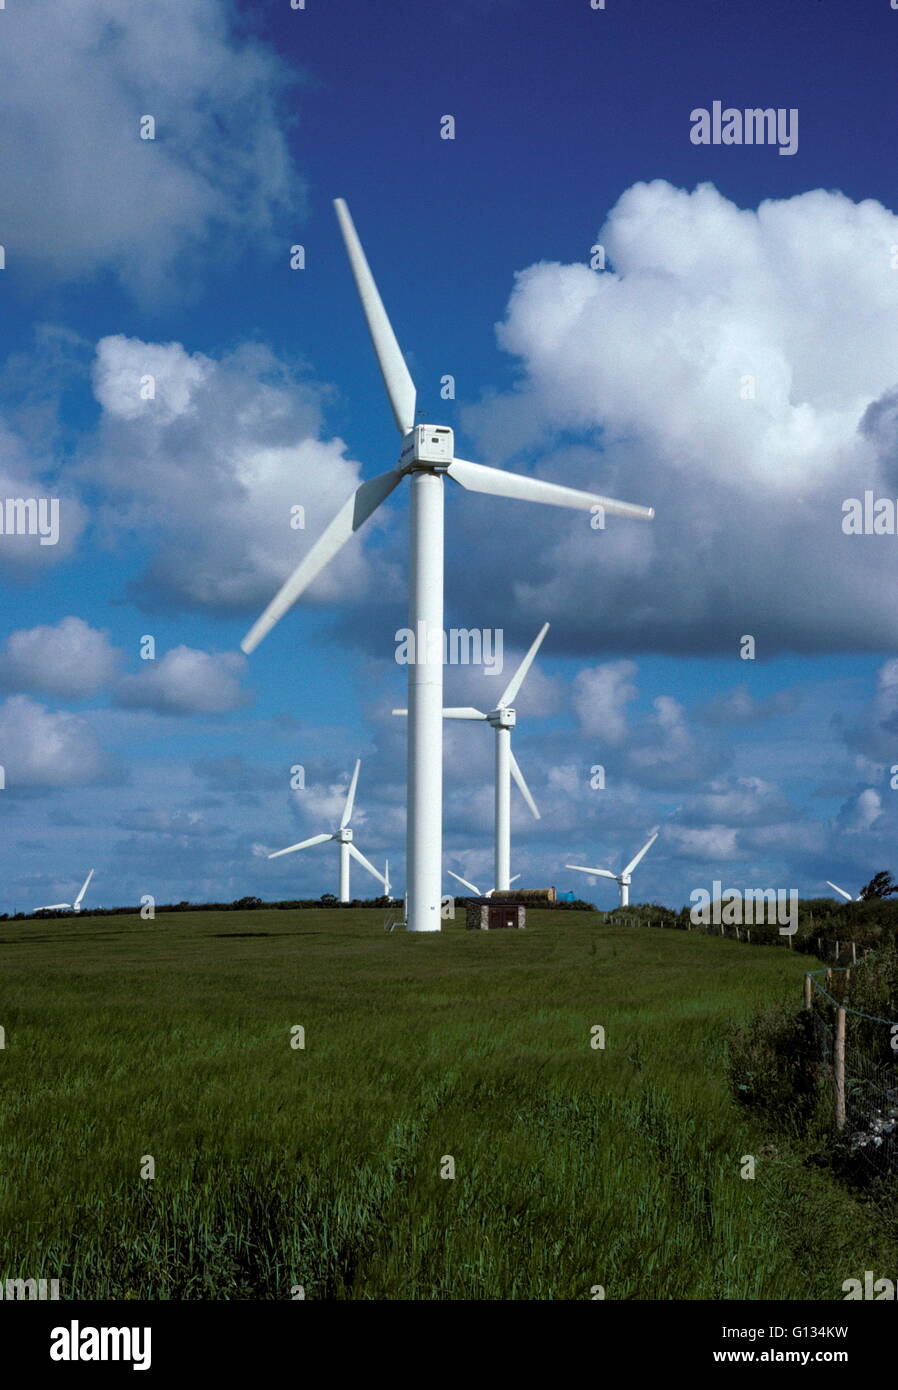 AJAX NEWS FOTO - CORNWALL, Inghilterra. Le turbine eoliche. Foto:JONATHAN EASTLAND/AJAX REF: 21501 4 99 Foto Stock